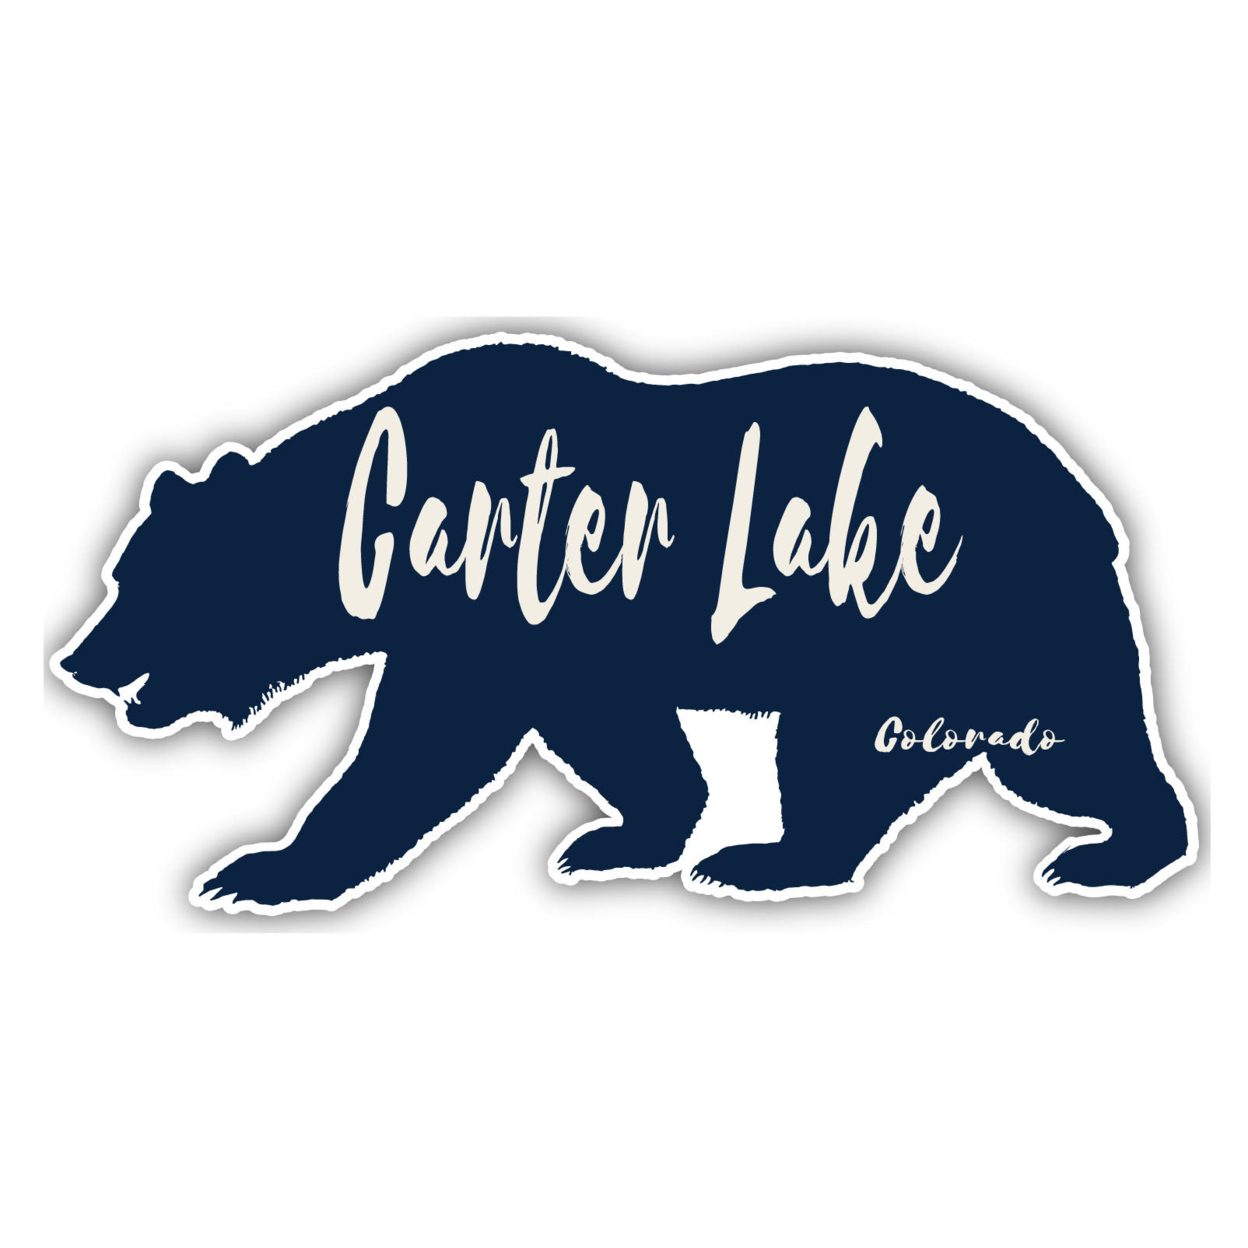 Carter Lake Colorado Souvenir Decorative Stickers (Choose Theme And Size) - Single Unit, 6-Inch, Tent